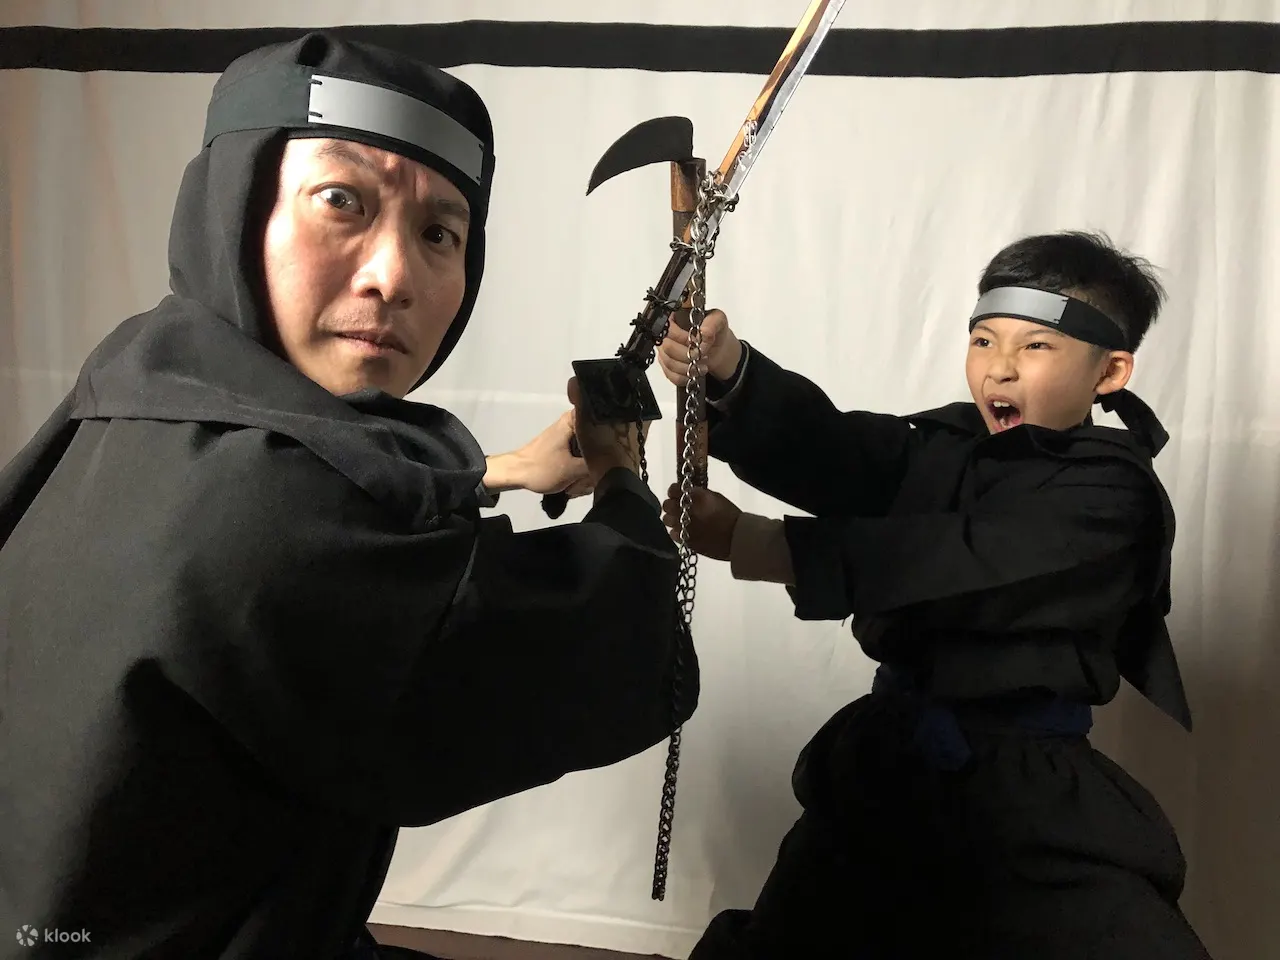 Ninja Workshop and Costume Rental Experience in Osaka - Discover the Ninja Way in Osaka